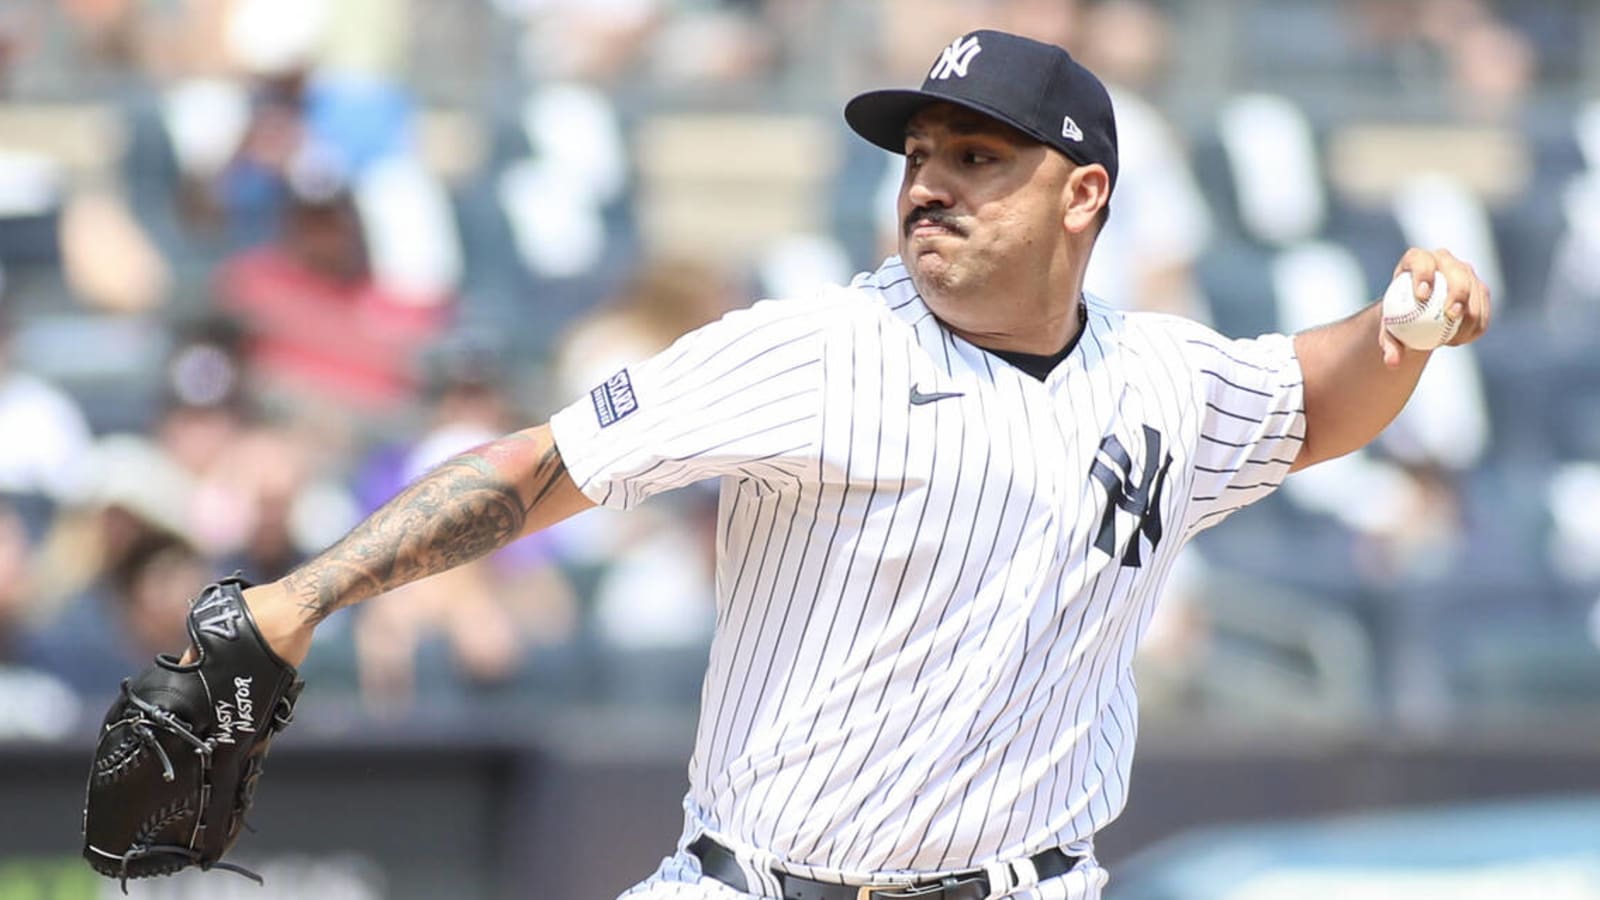 Yankees pitcher wears unusual denim cleats